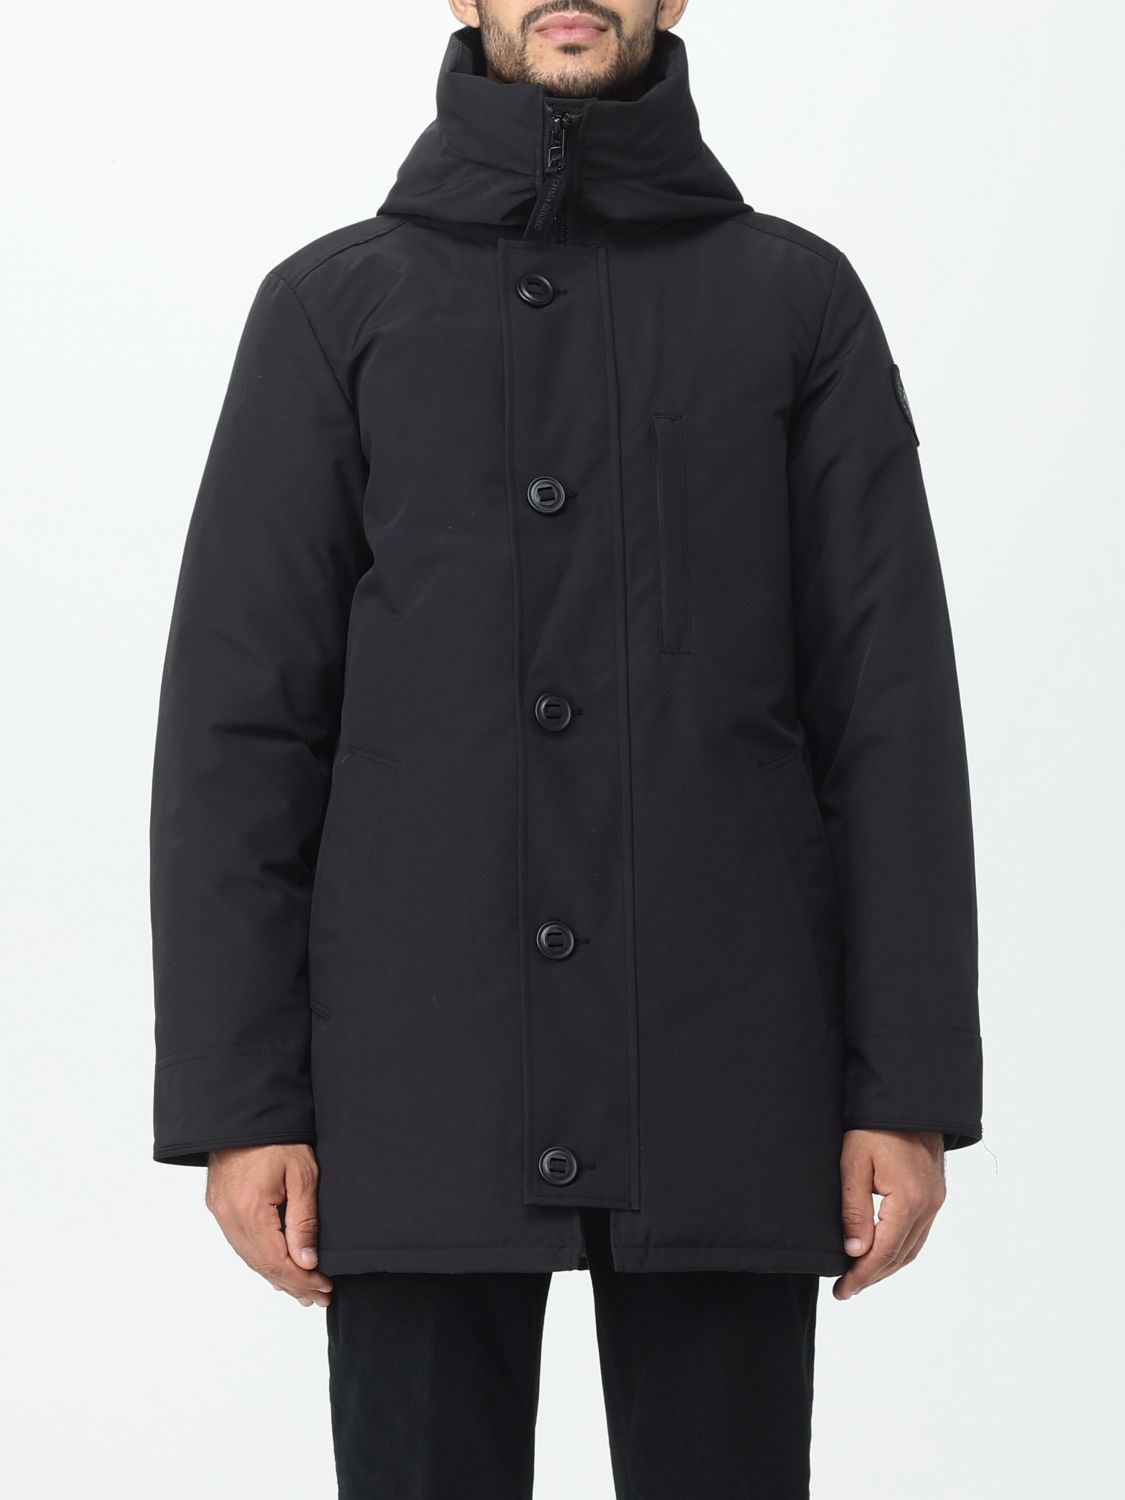 CANADA GOOSE: jacket for man - Black | Canada Goose jacket 2053MB ...